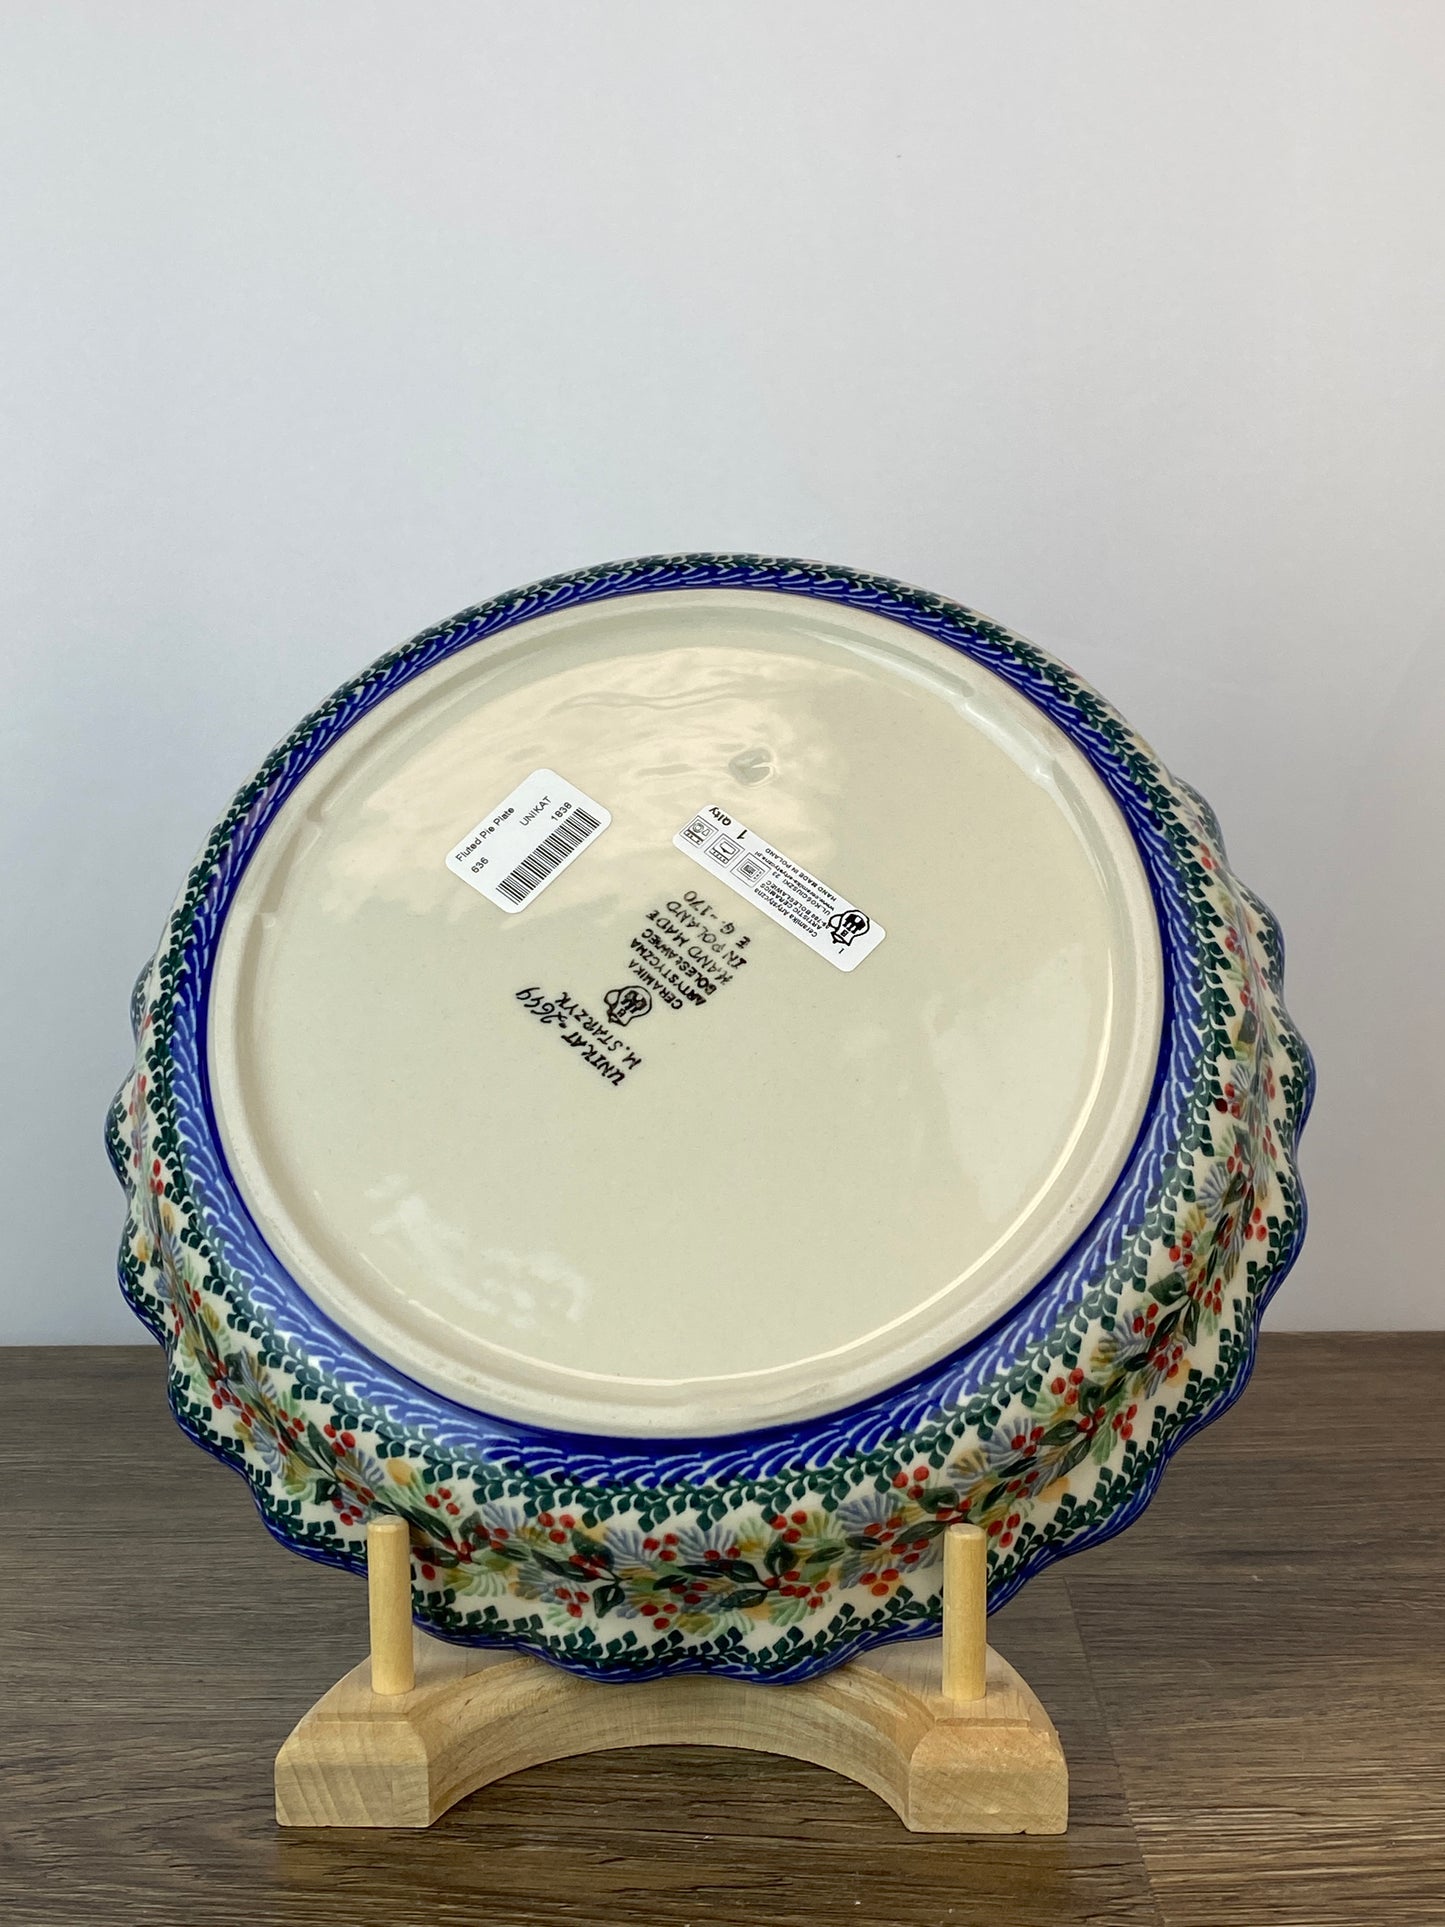 SALE Ruffled Unikat Pie Plate / Round Baker - Shape 636 - Pattern U2649